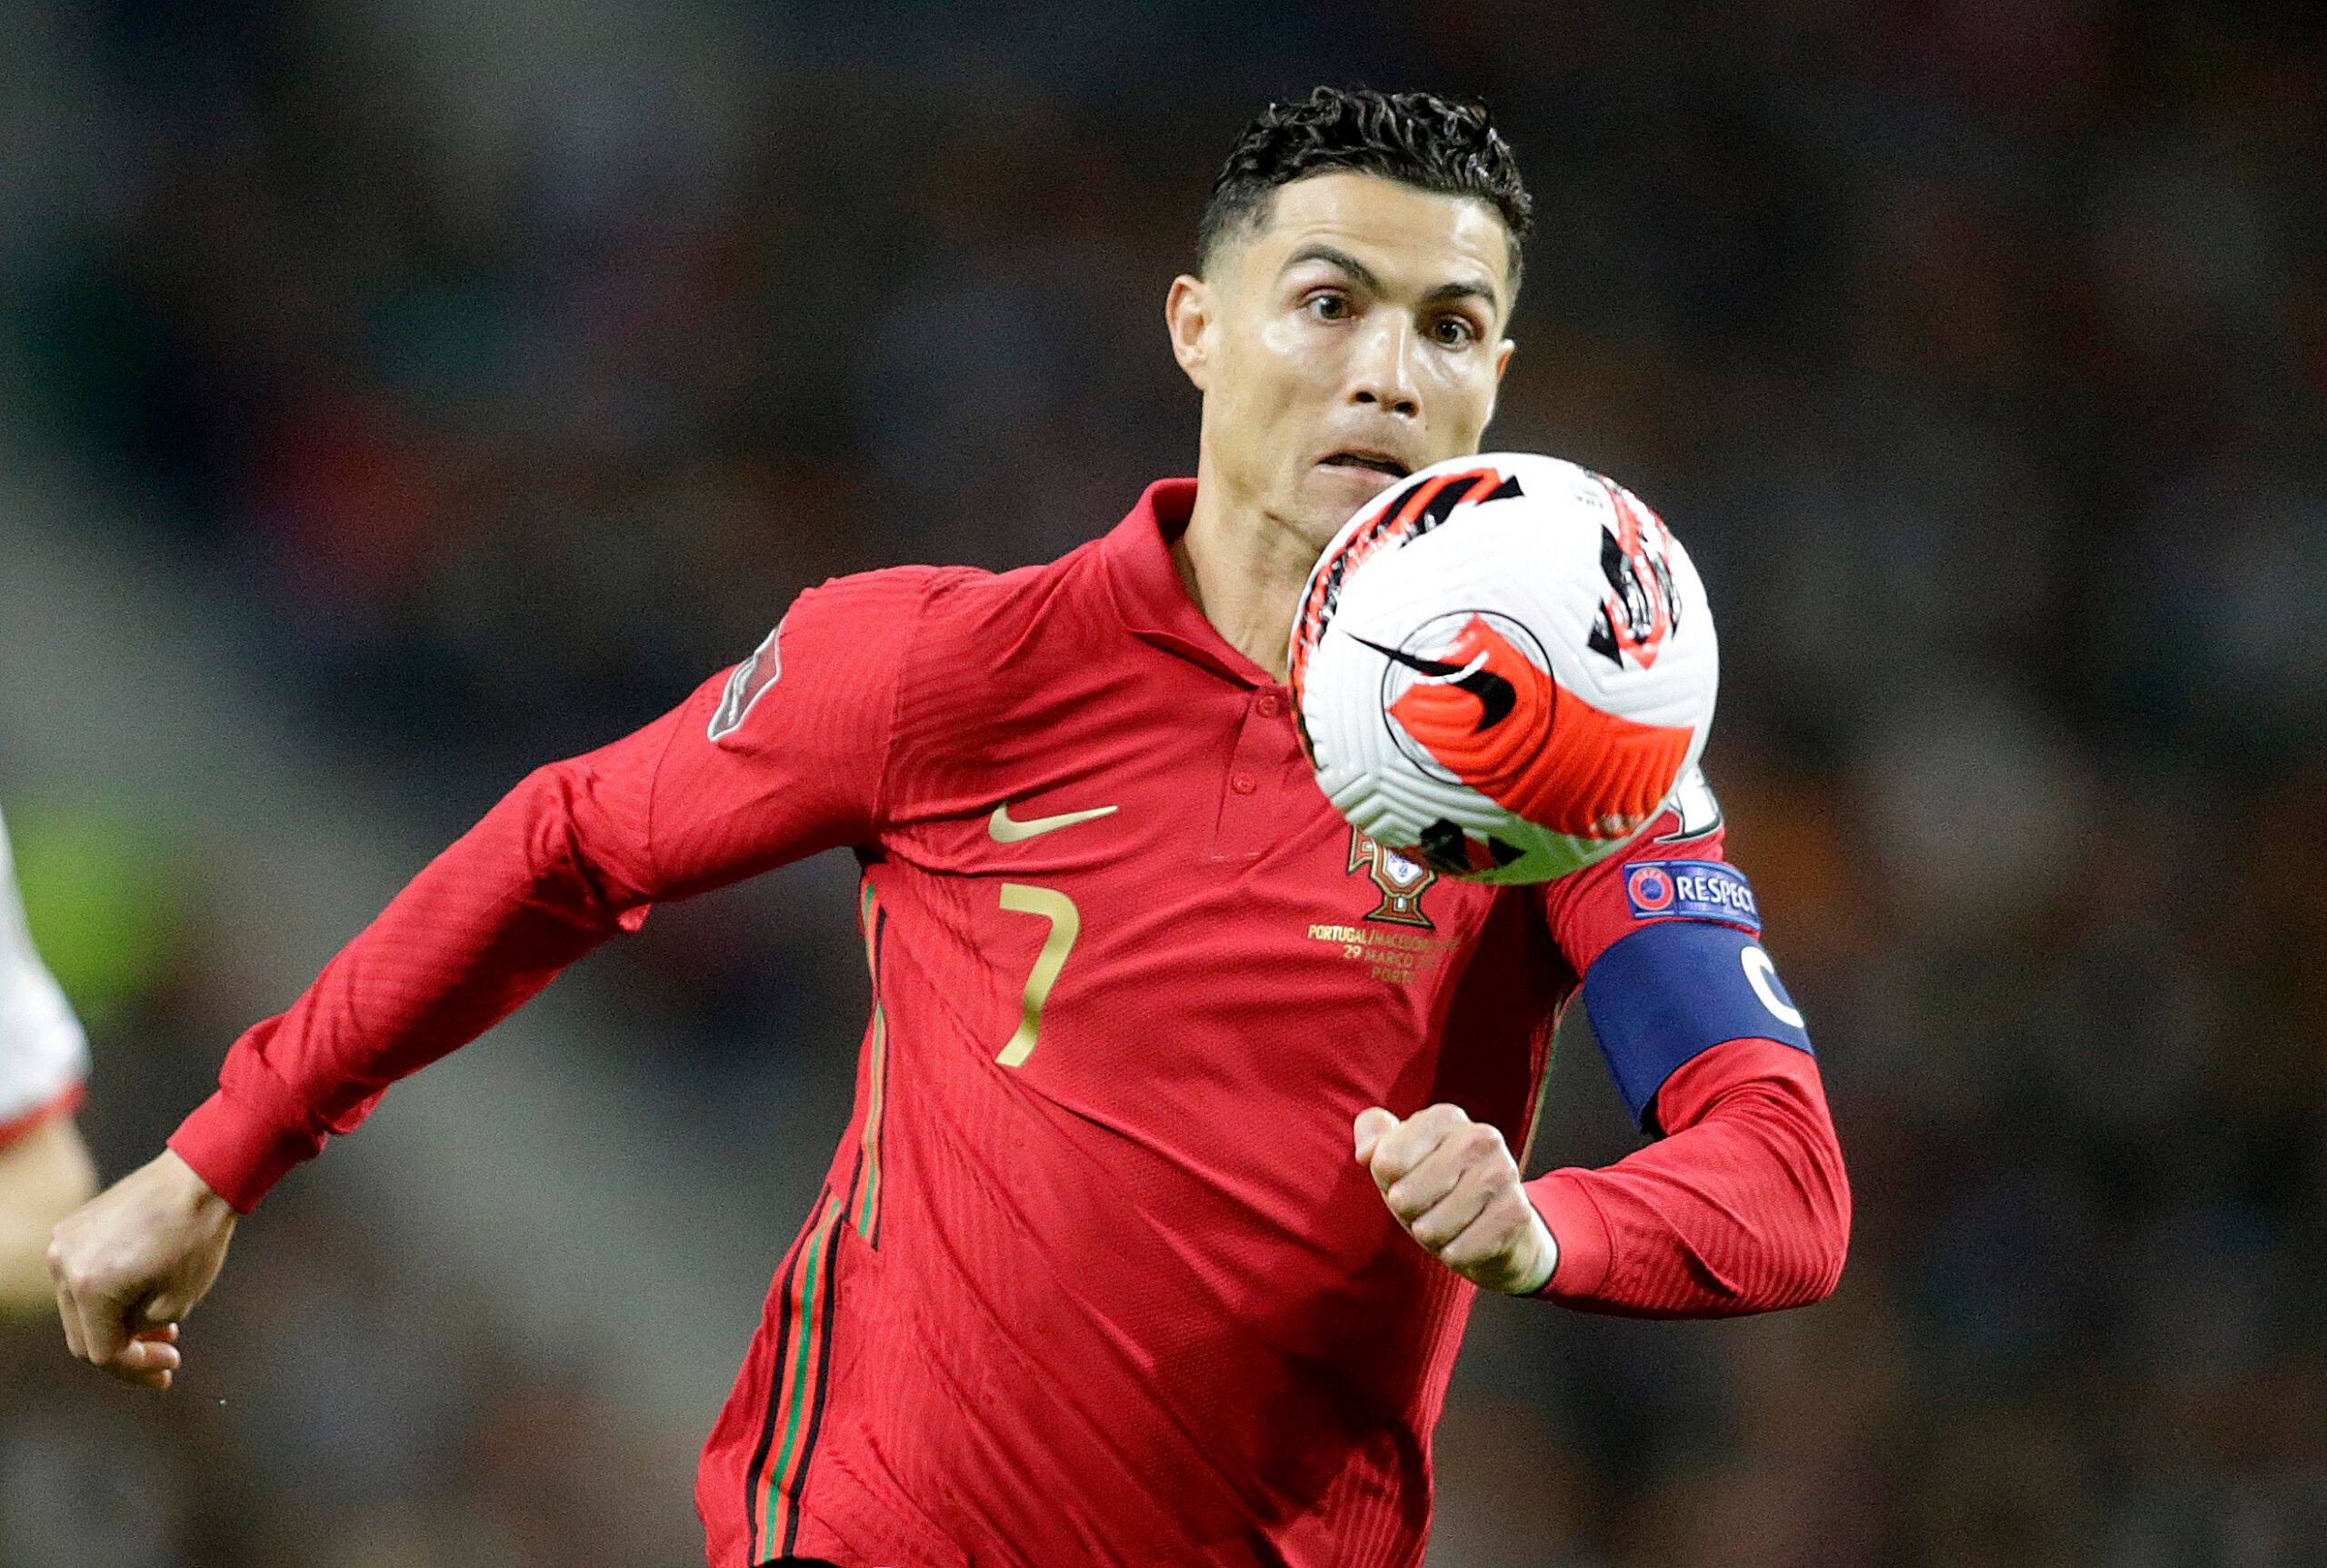 Ronaldo playing for Portugal.